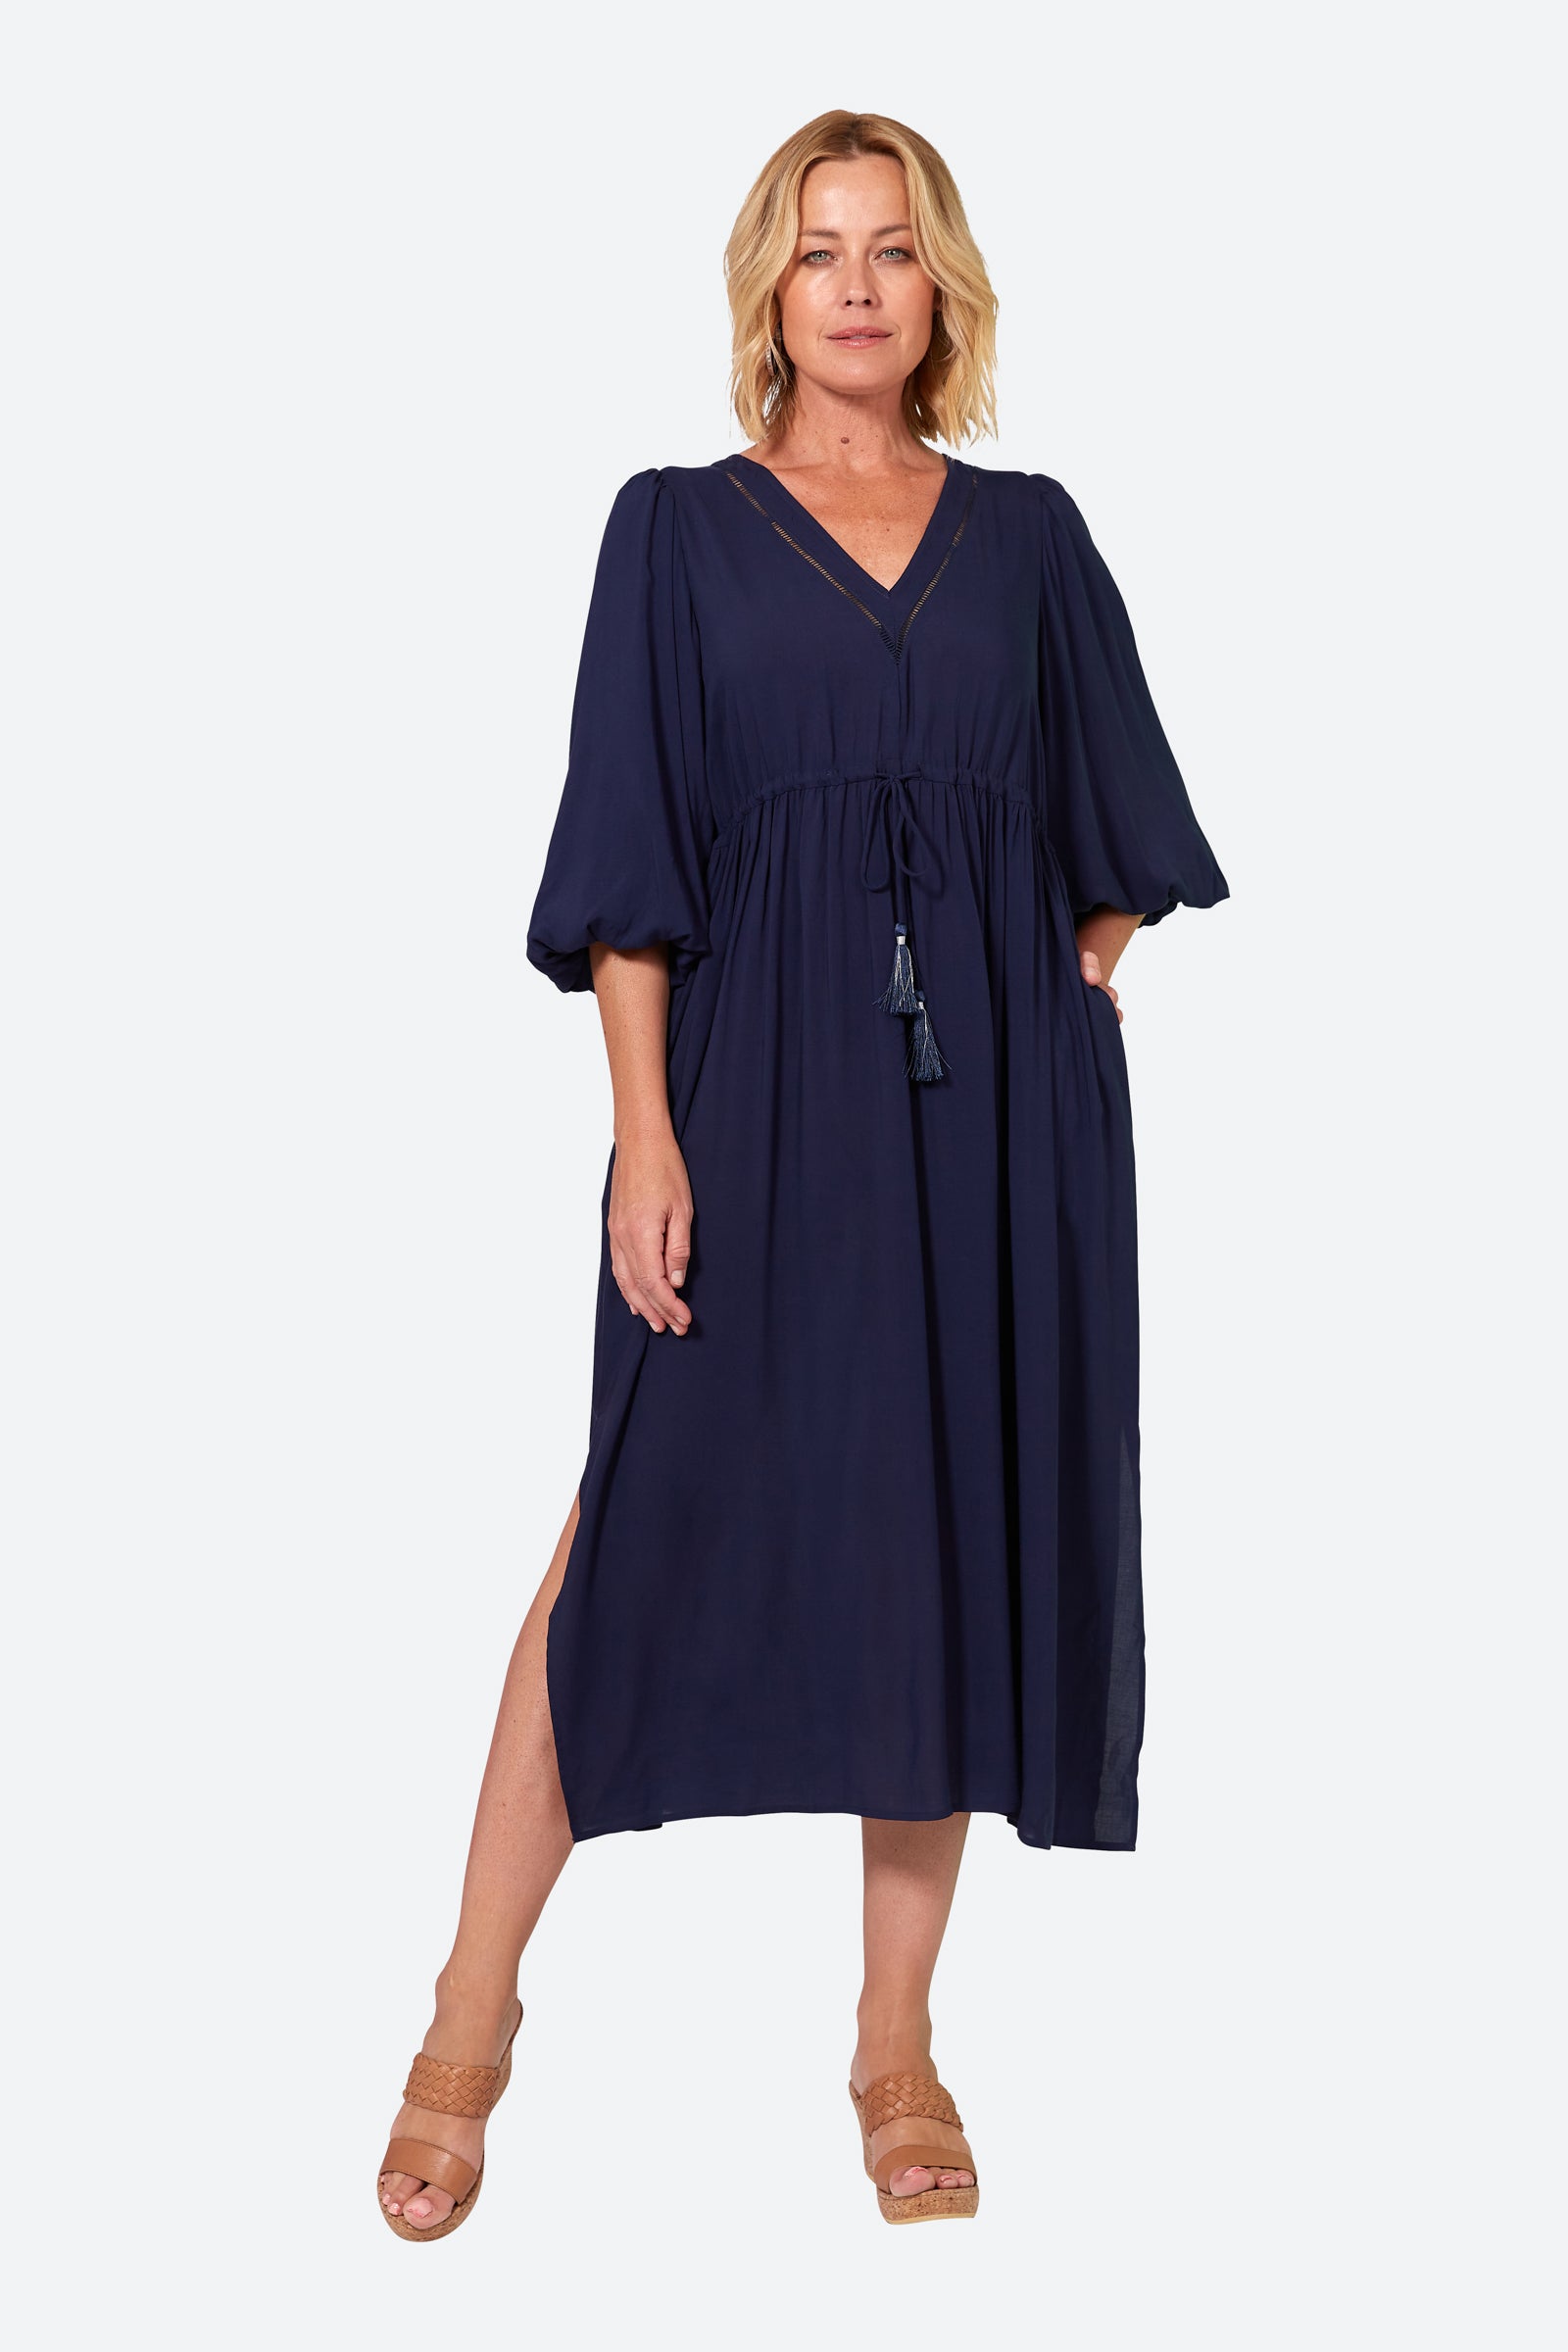 Esprit Maxi - Sapphire - eb&ive Clothing - Dress Maxi